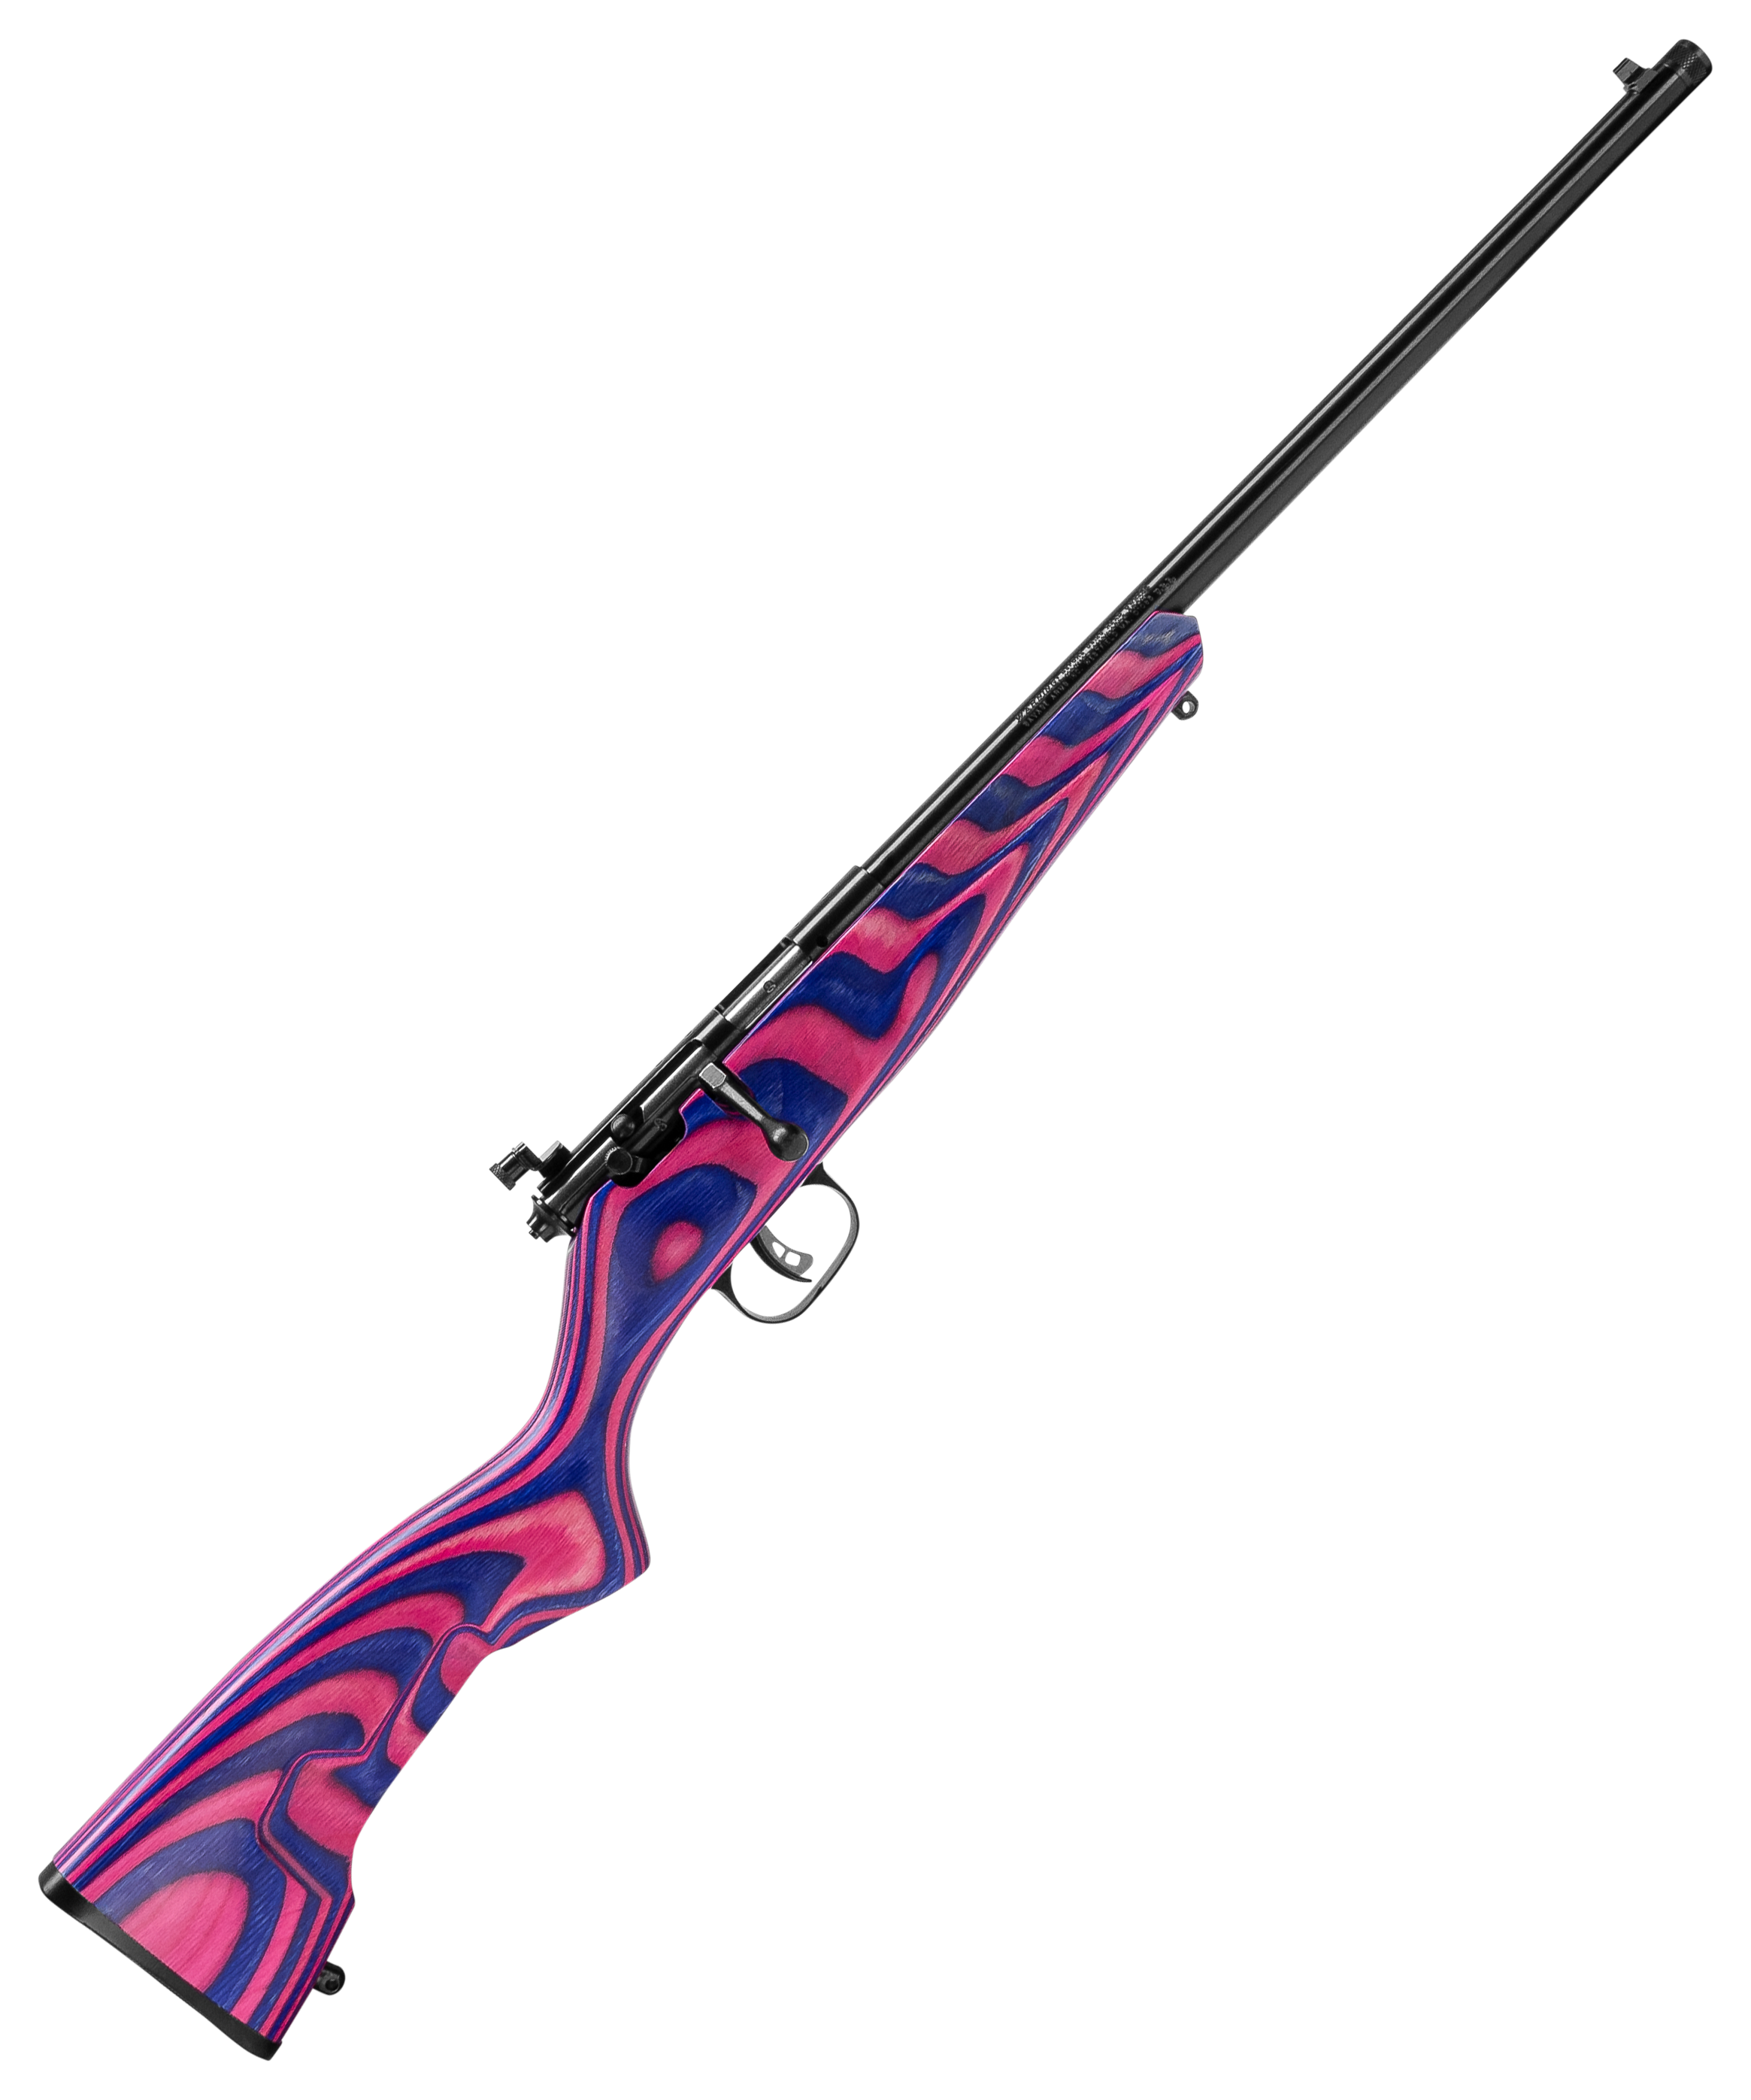 Savage 13797 Rascal Minimalist Single Shot Bolt Rifle, 22 LR, 16.13" BBL, Pink/Purple, Accutrigger, 0685-2480